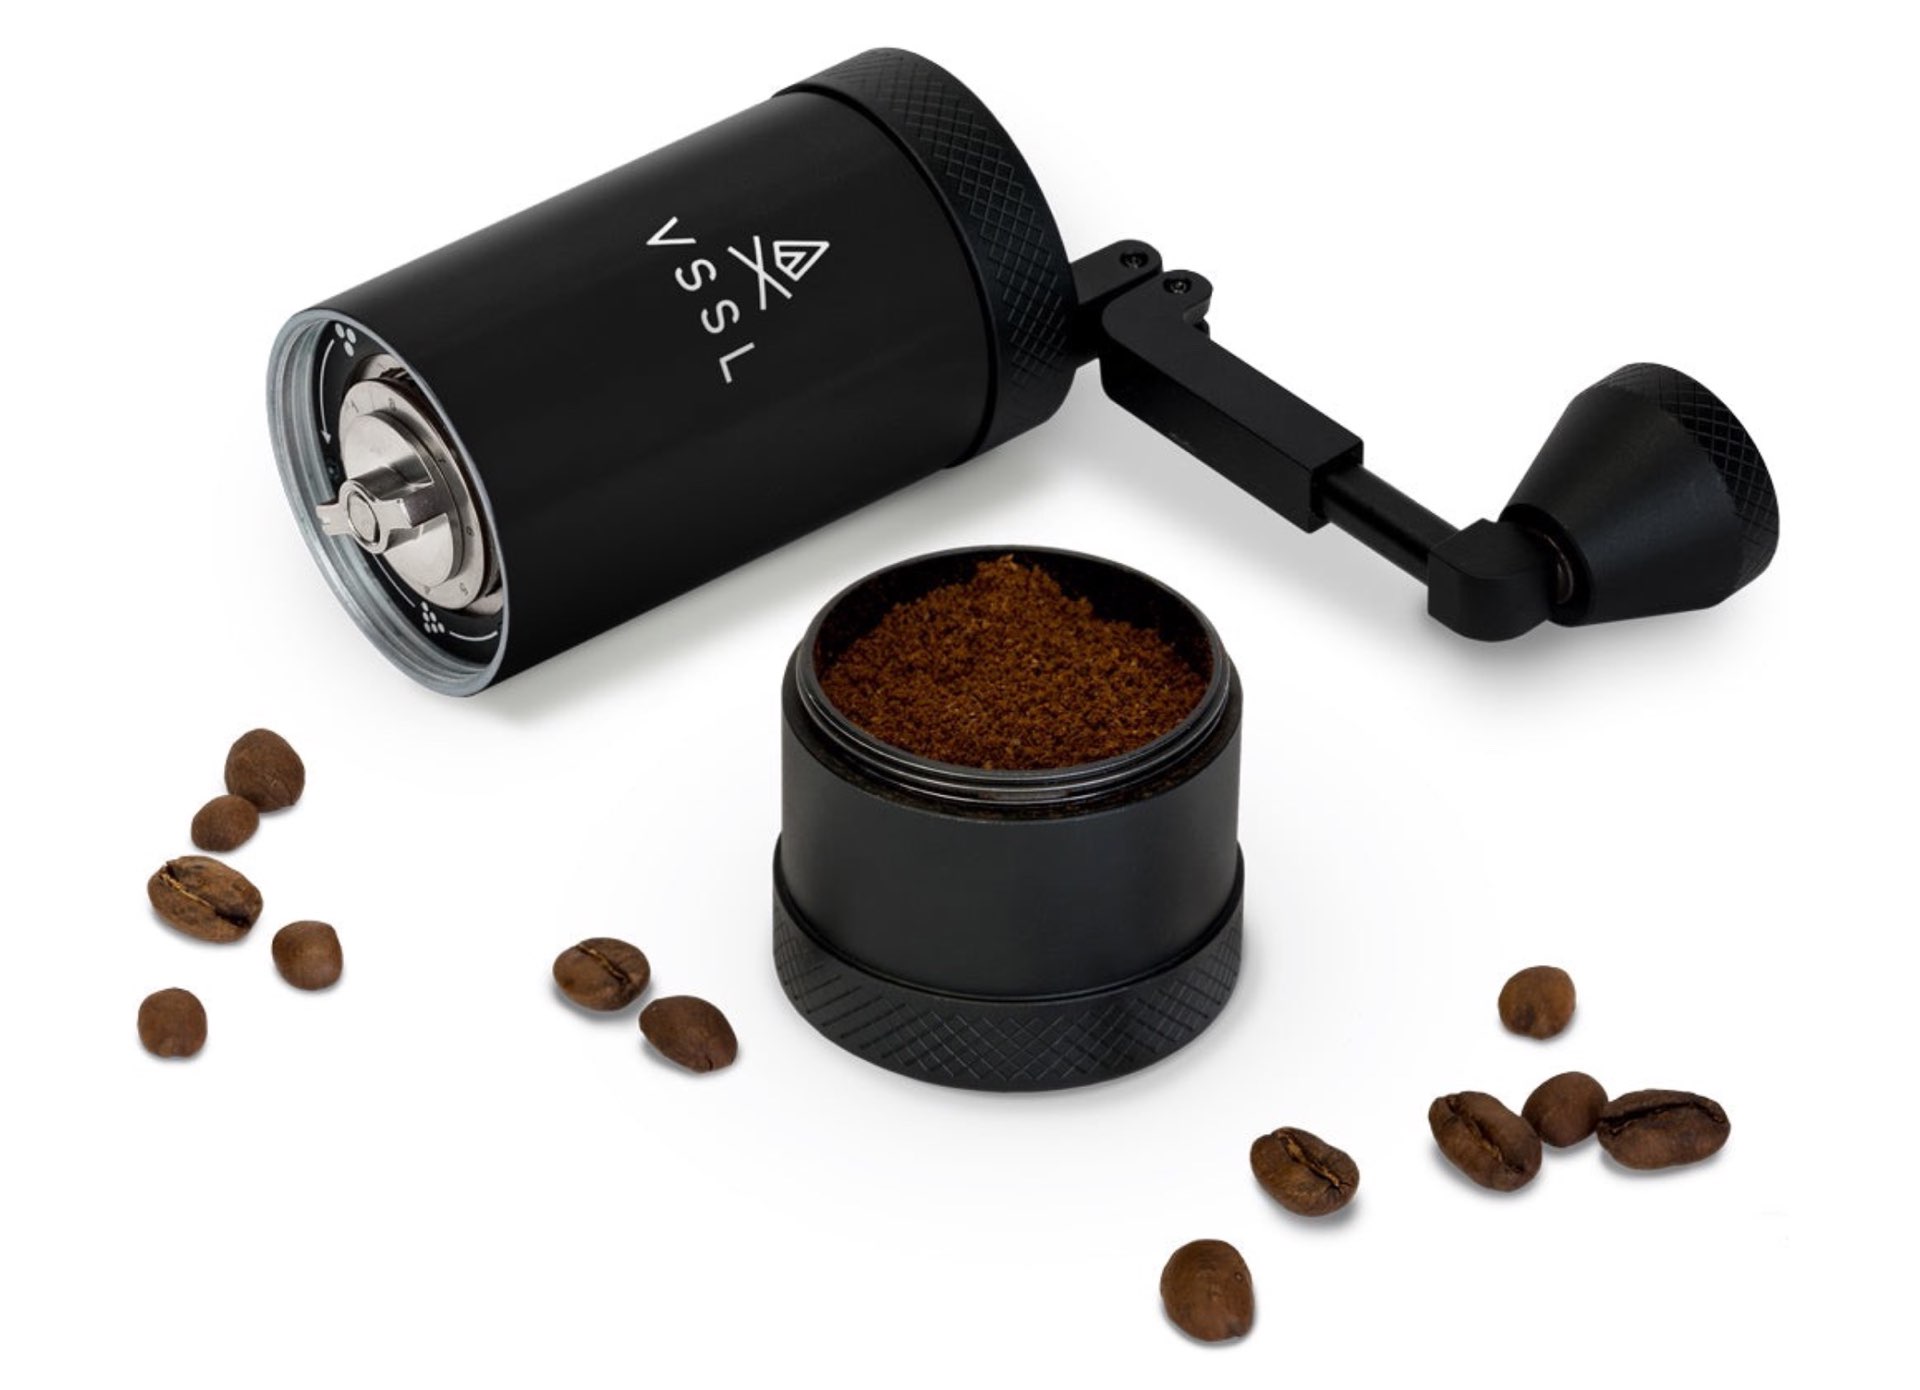 vssl-java-manual-travel-coffee-grinder